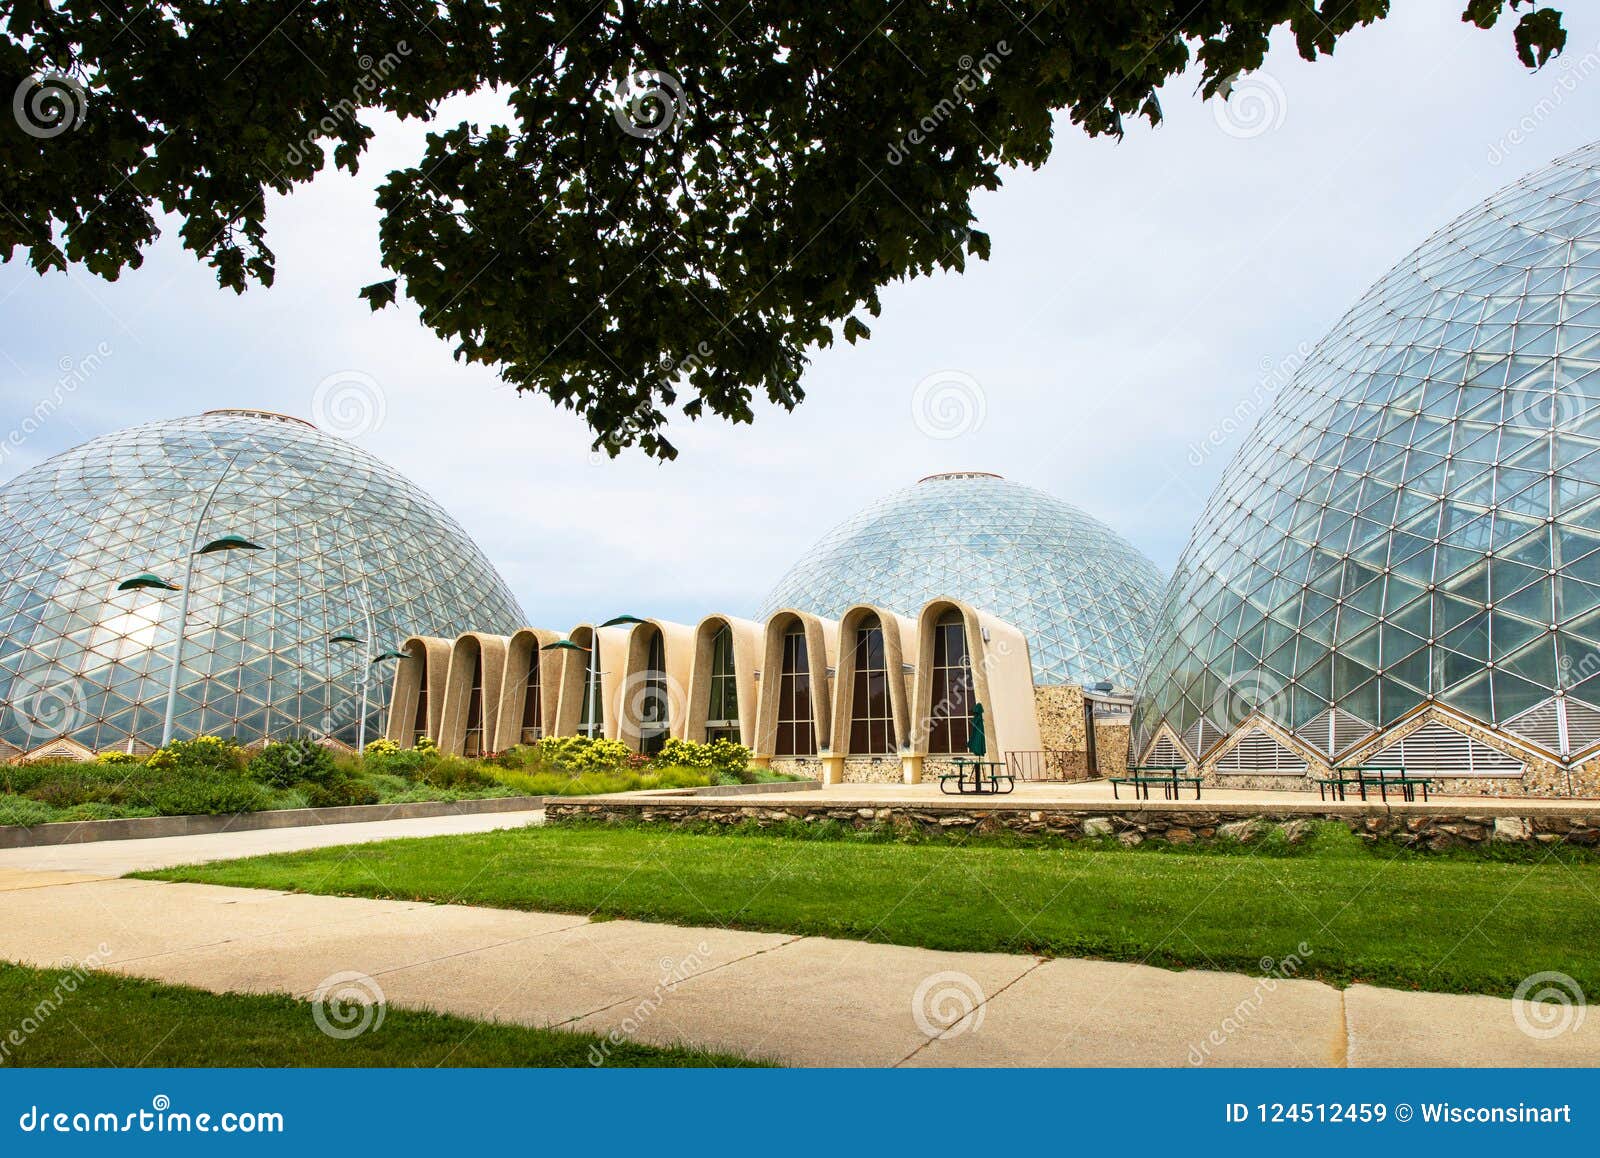 mitchell domes, milwaukee wisconsin conservatory